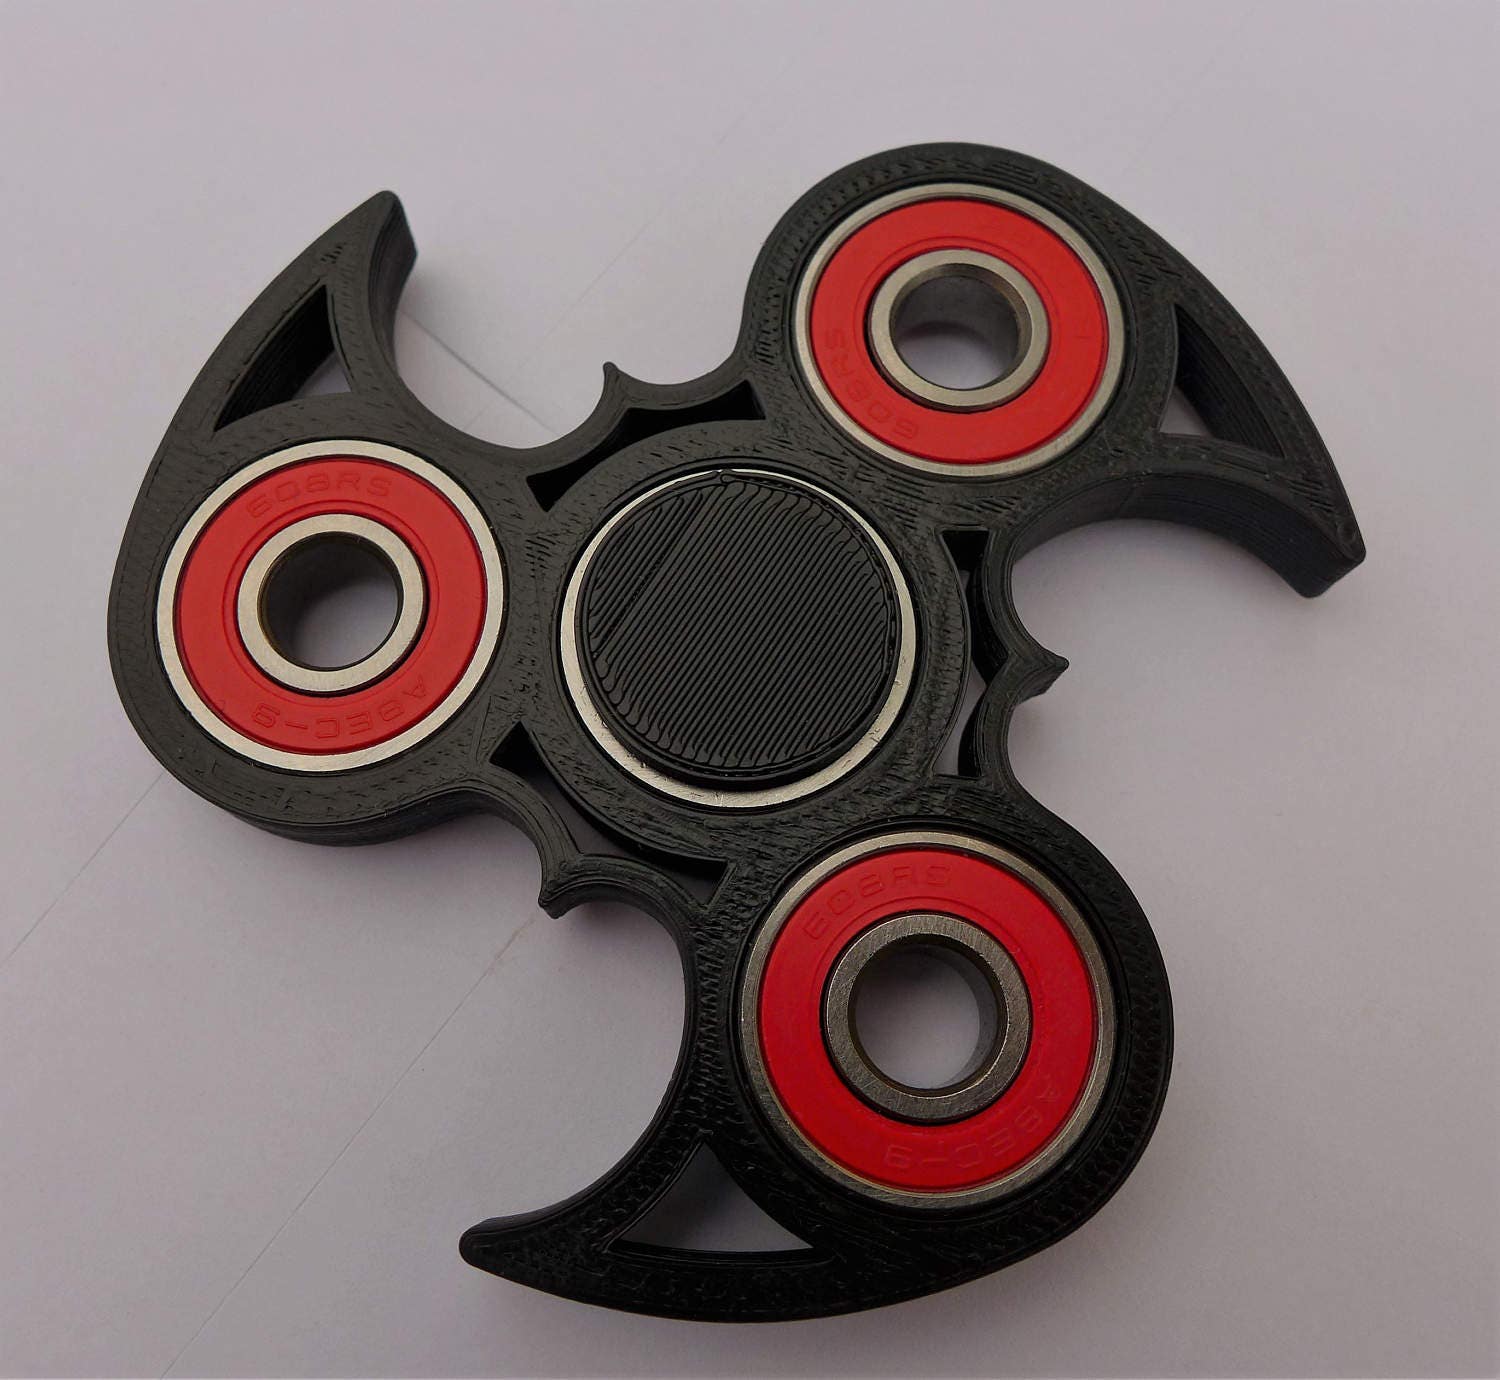 Ninja Fidget Hand Spinner 3D Toy Black with Steel Red Bearings